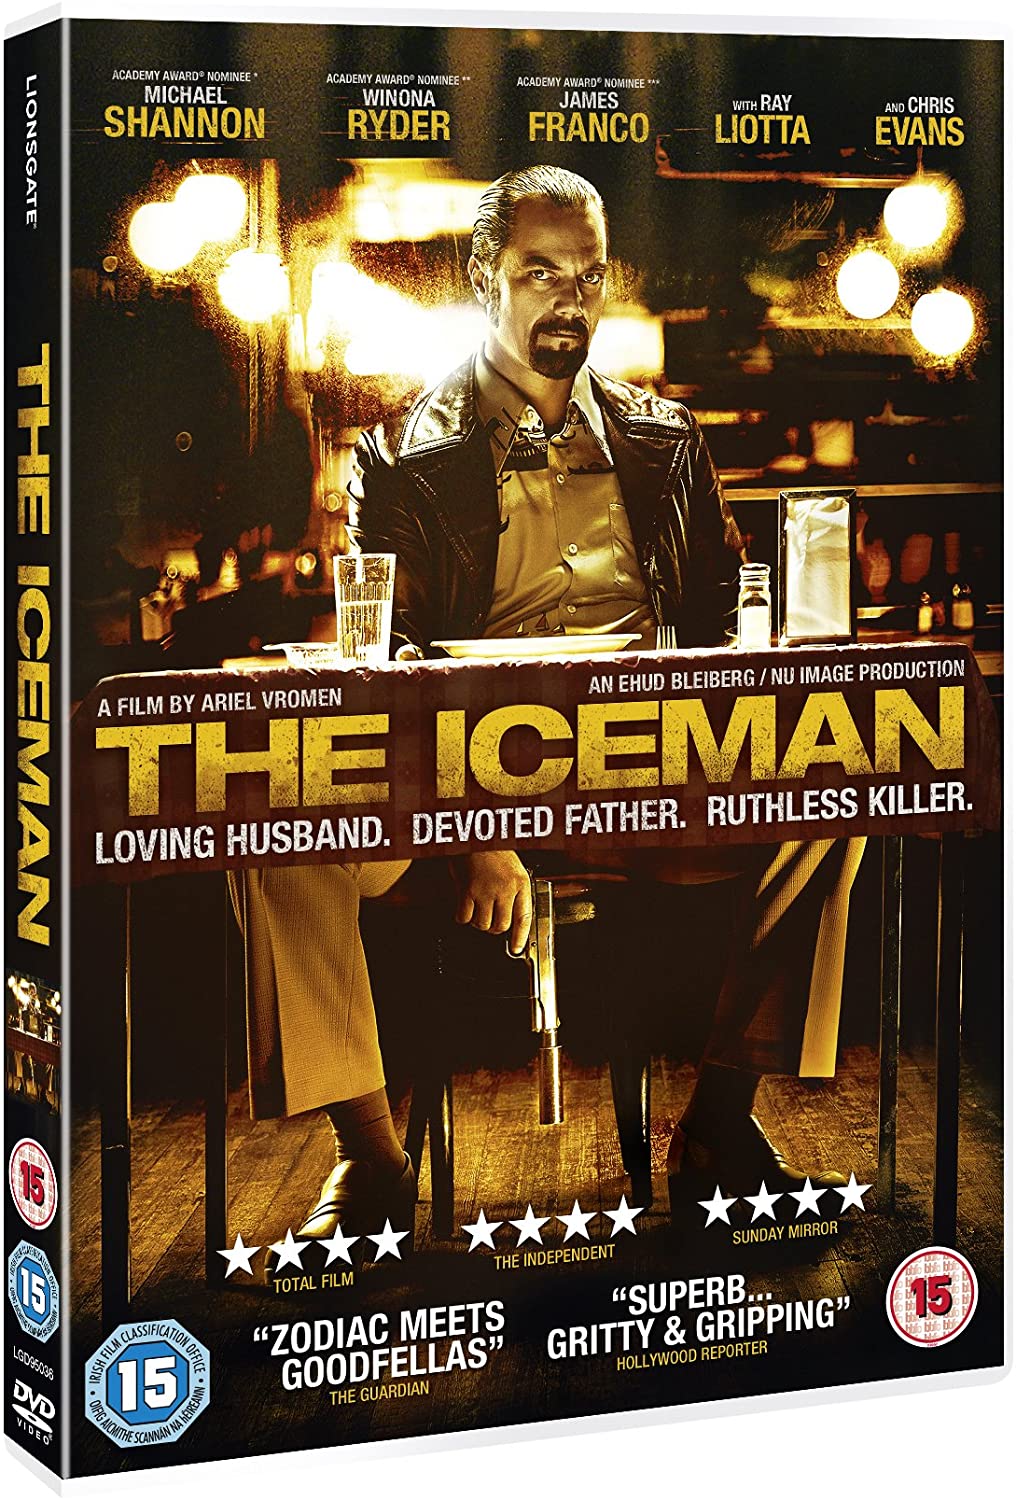 The Iceman - Crime/Thriller [DVD]